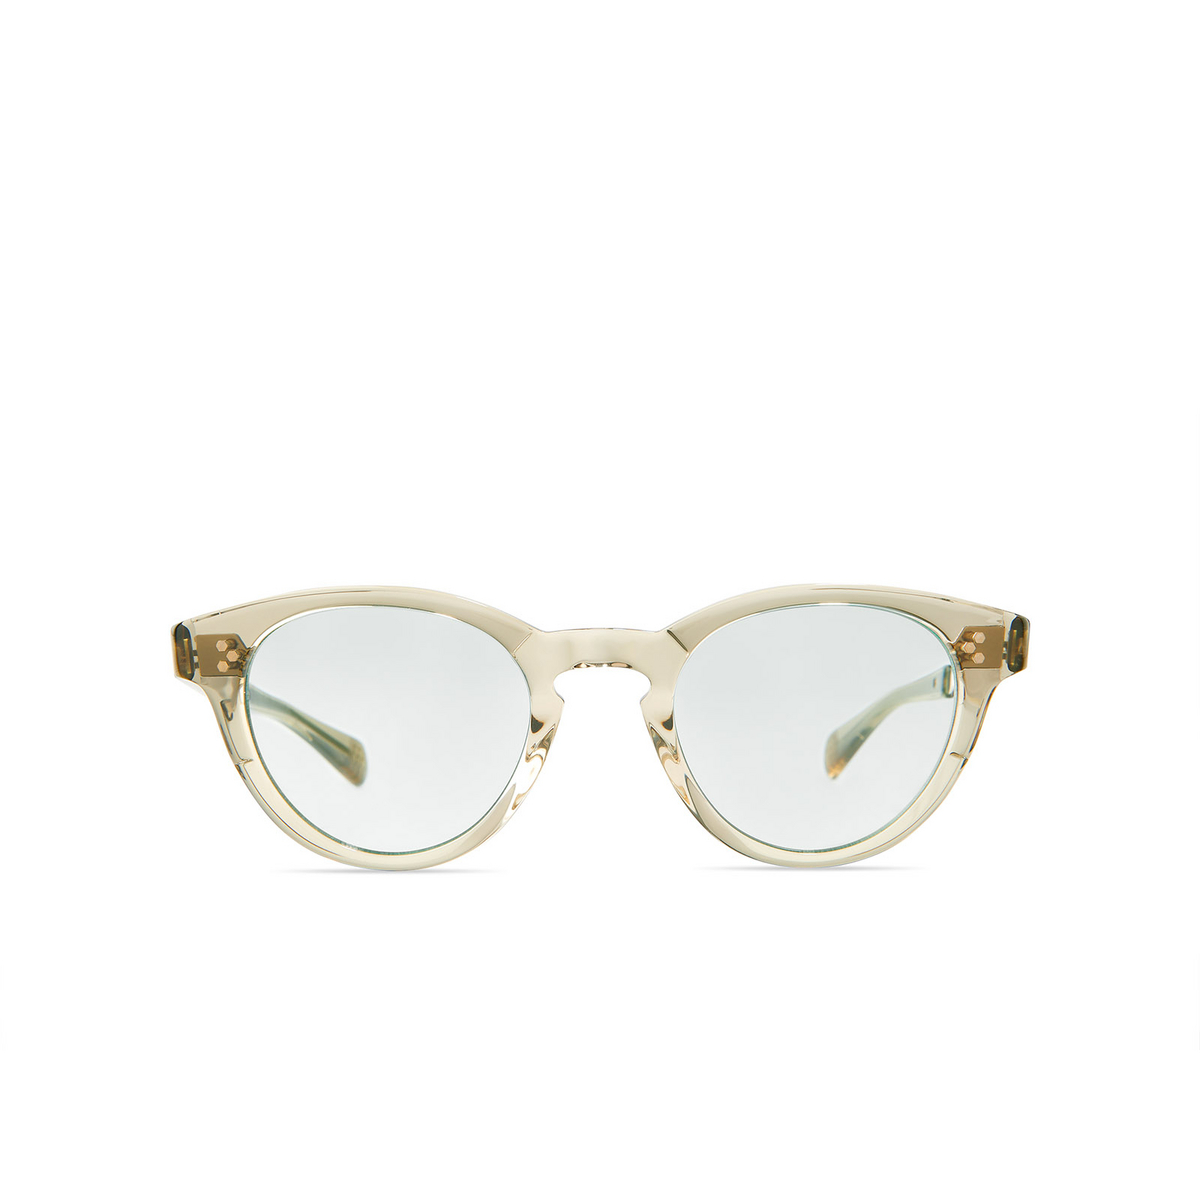 Mr. Leight AUDREY C Eyeglasses OI-12KG-DEM MNT Olivine-12K White Gold-Demo Mint - front view